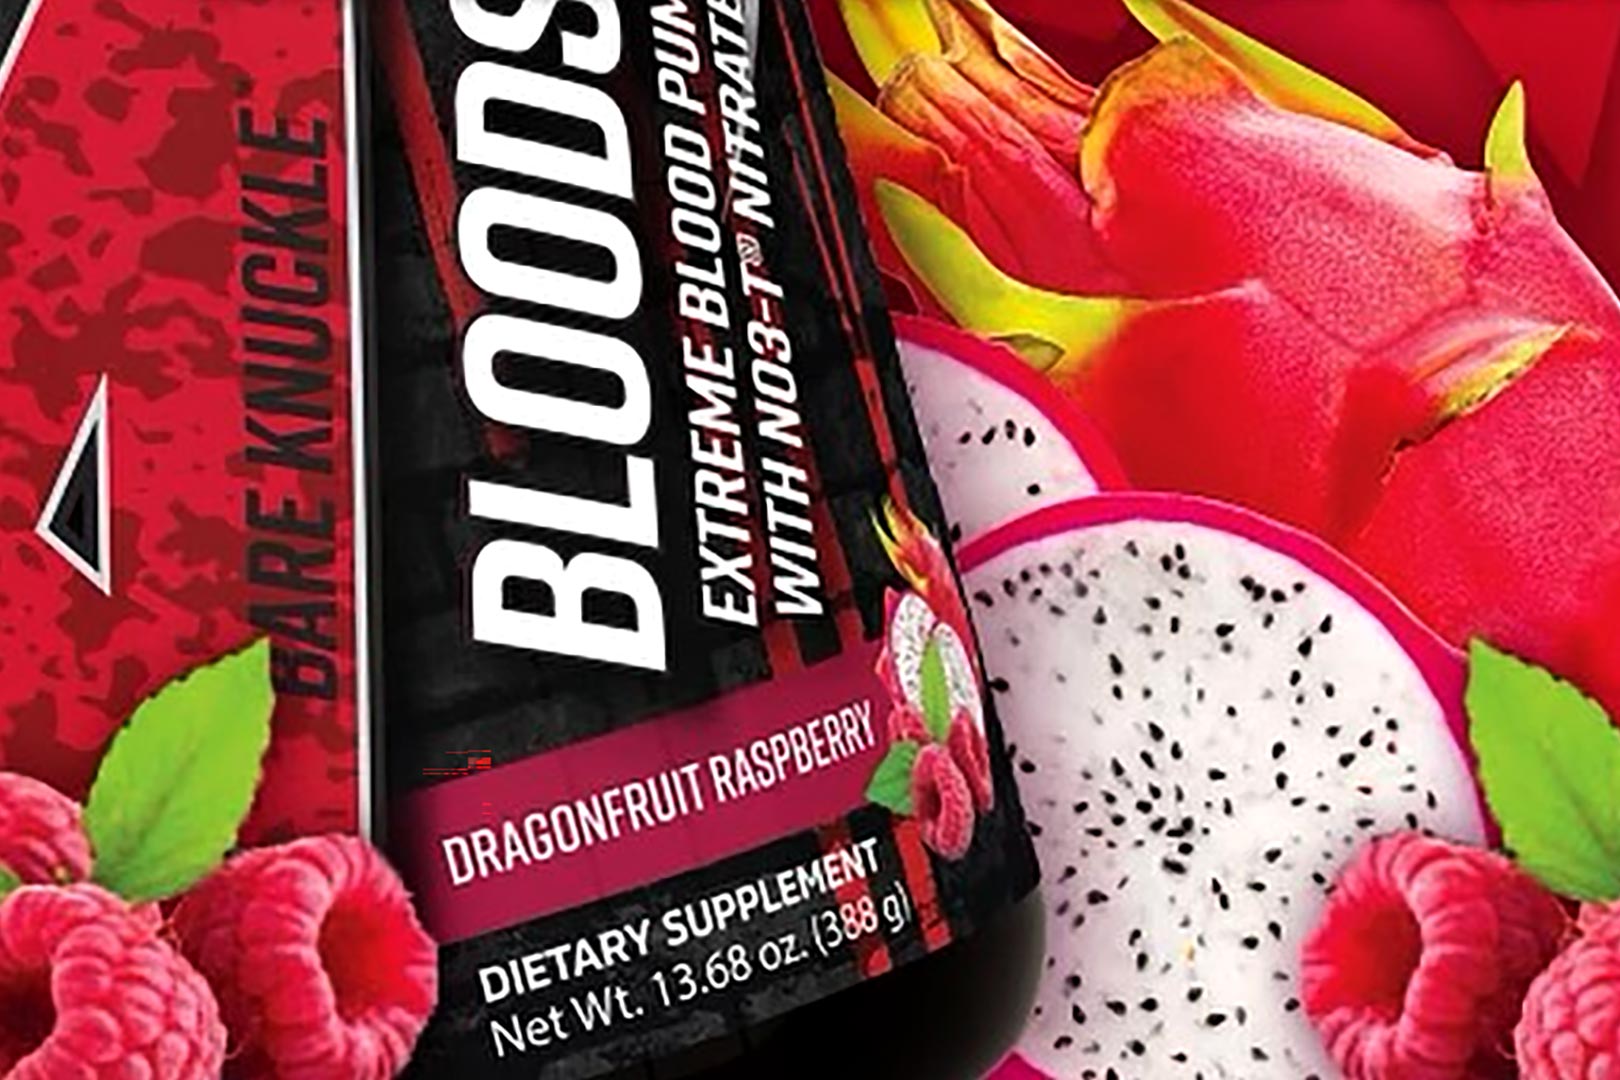 Apollon Officially Launch Dragonfruit Raspberry Bloodsport